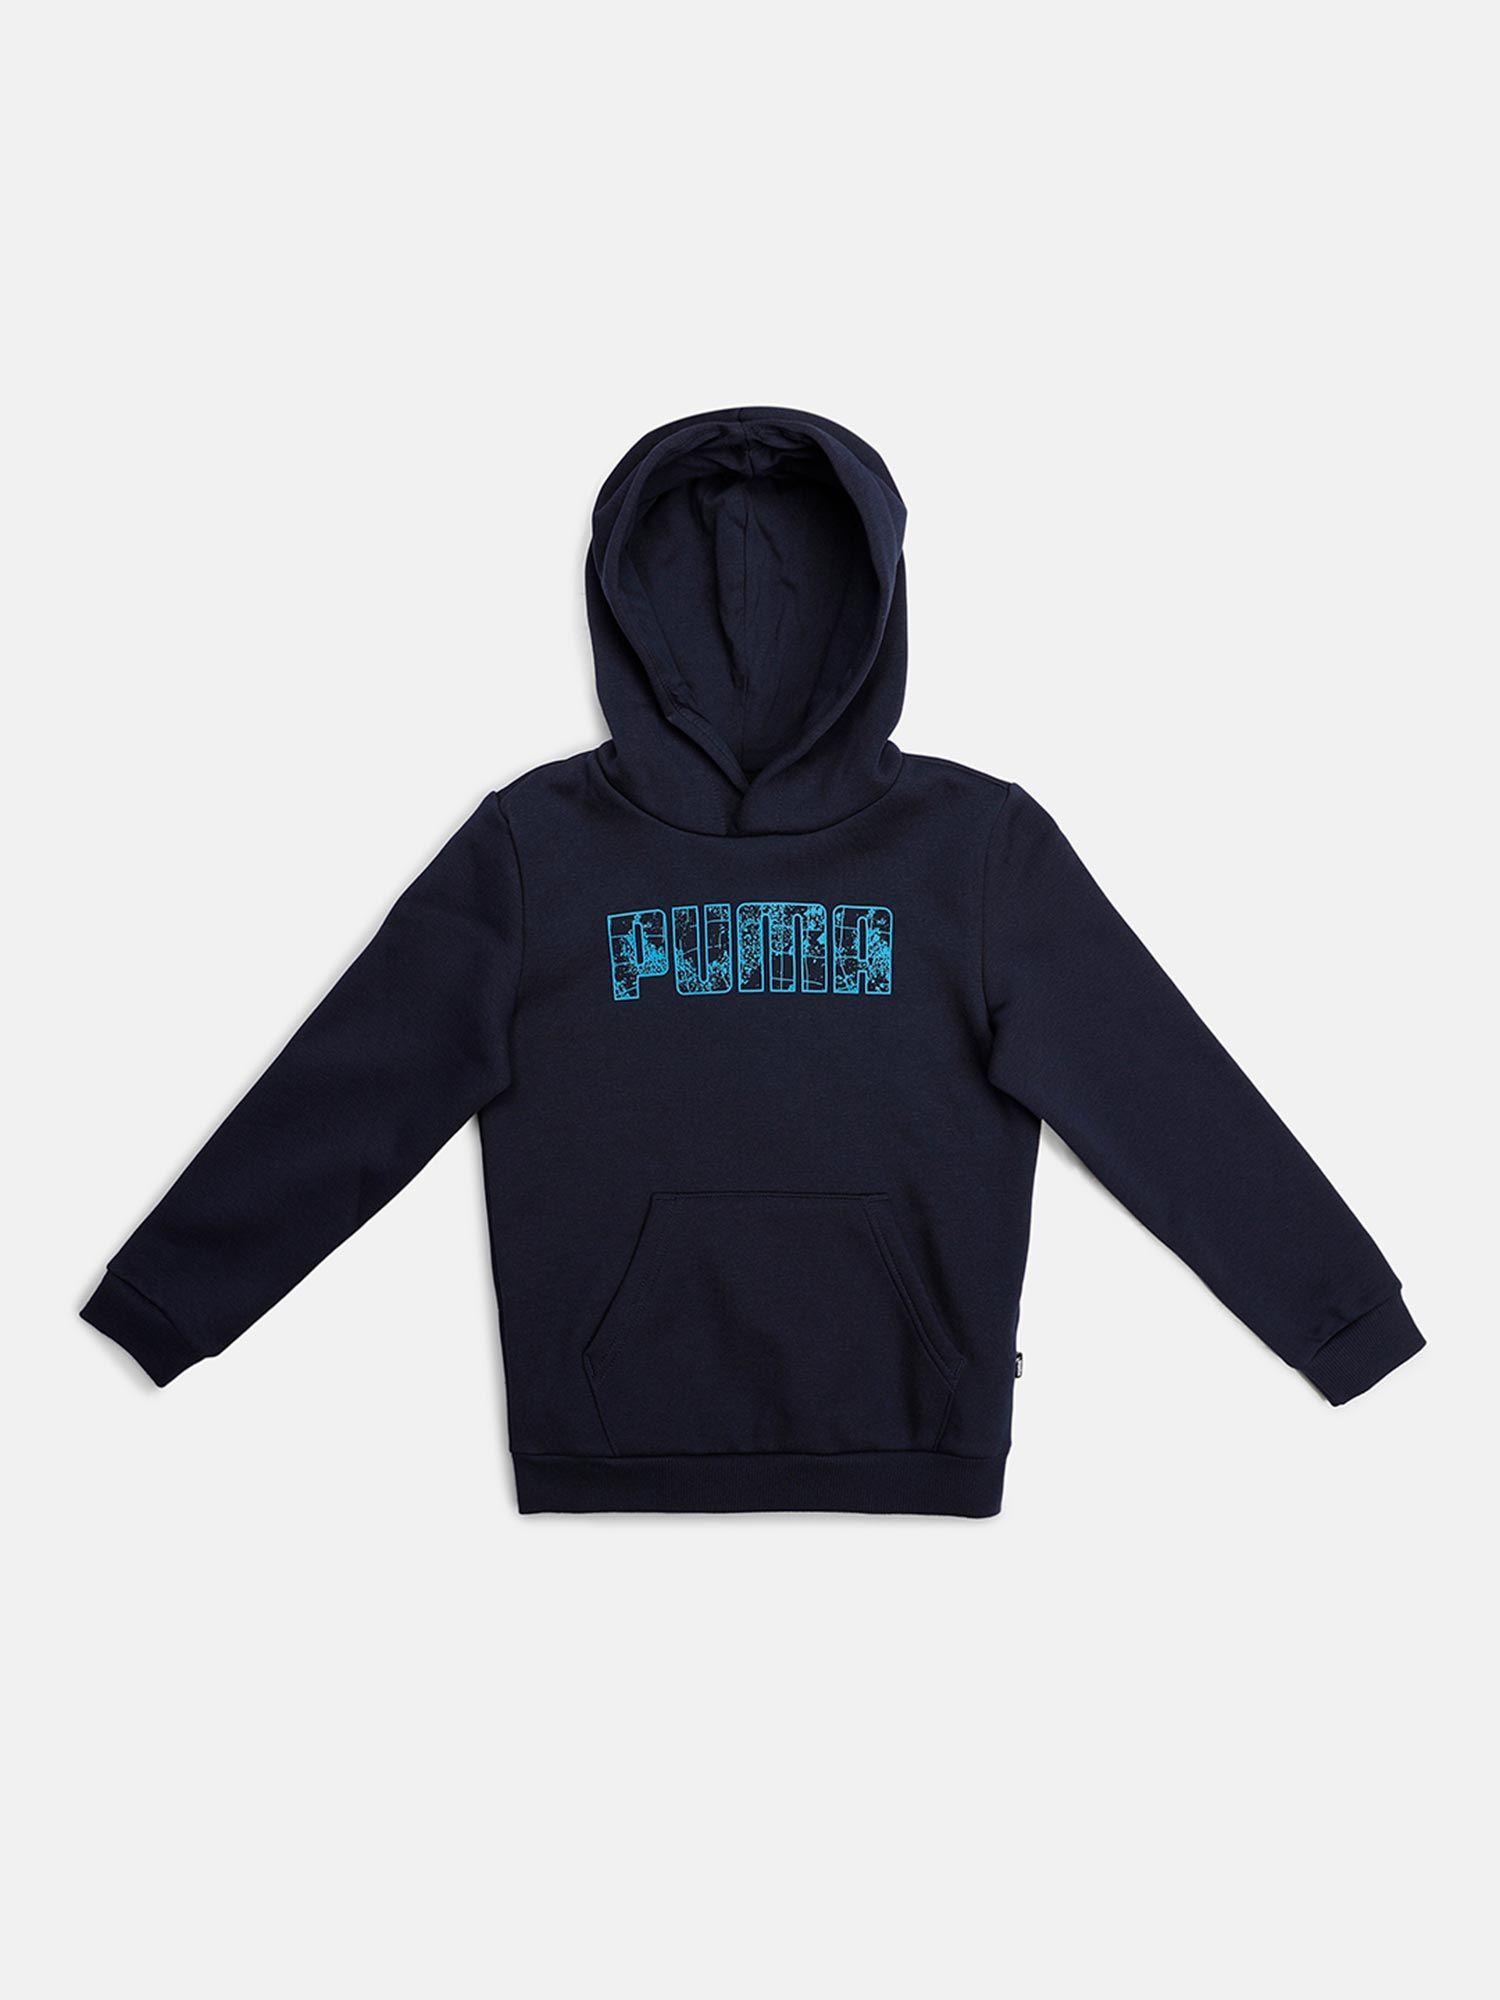 graphic kid's hoodie